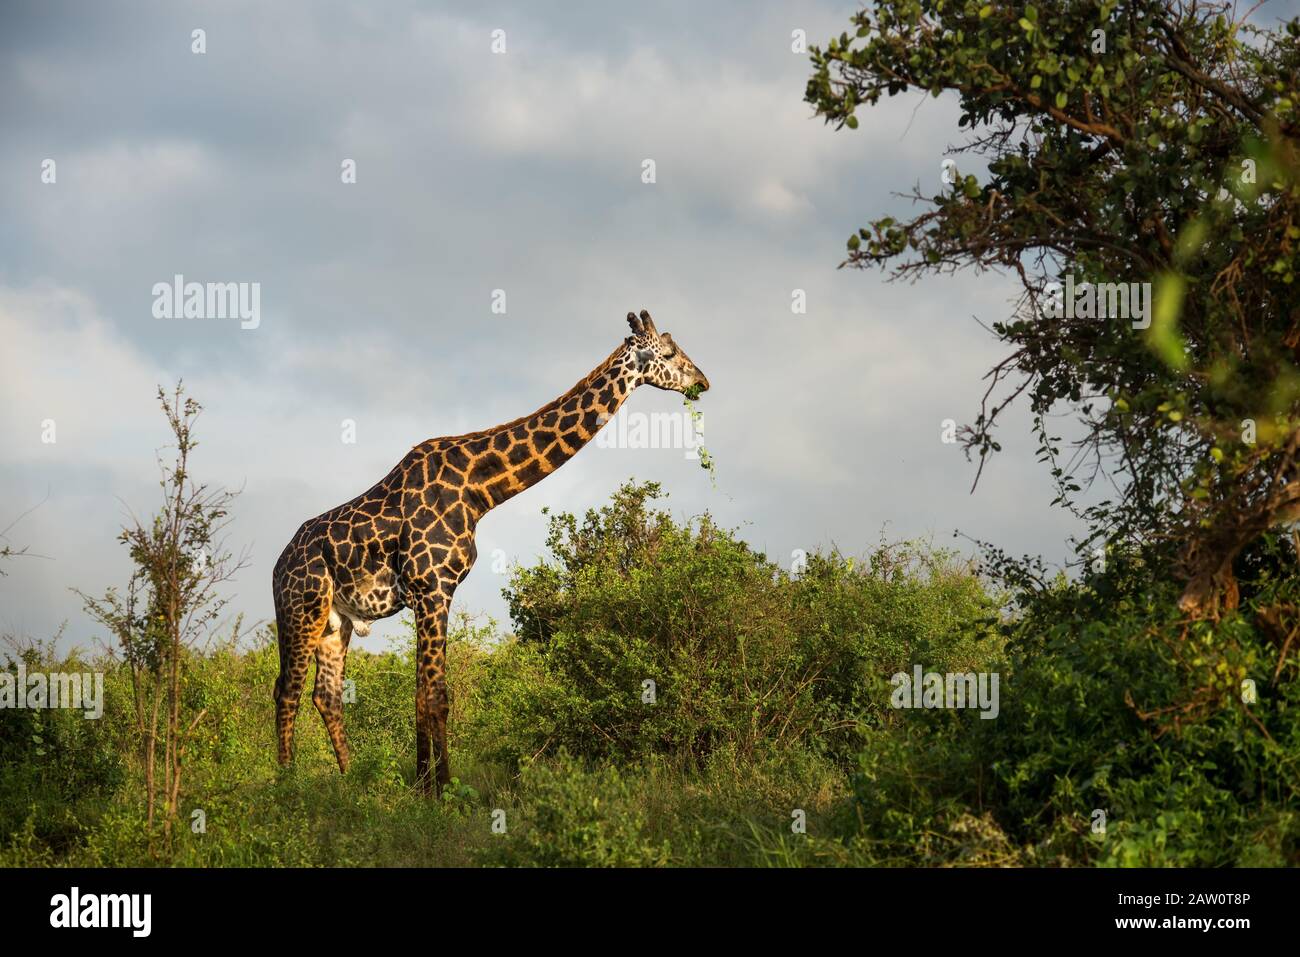 Giraffen in der Savanne, Safari in Kenia, Afrika, Familienbaby in Uganda, Tansania Botswana Jagd auf Elefanten Nationalpark Saanna Safari in Stockfoto